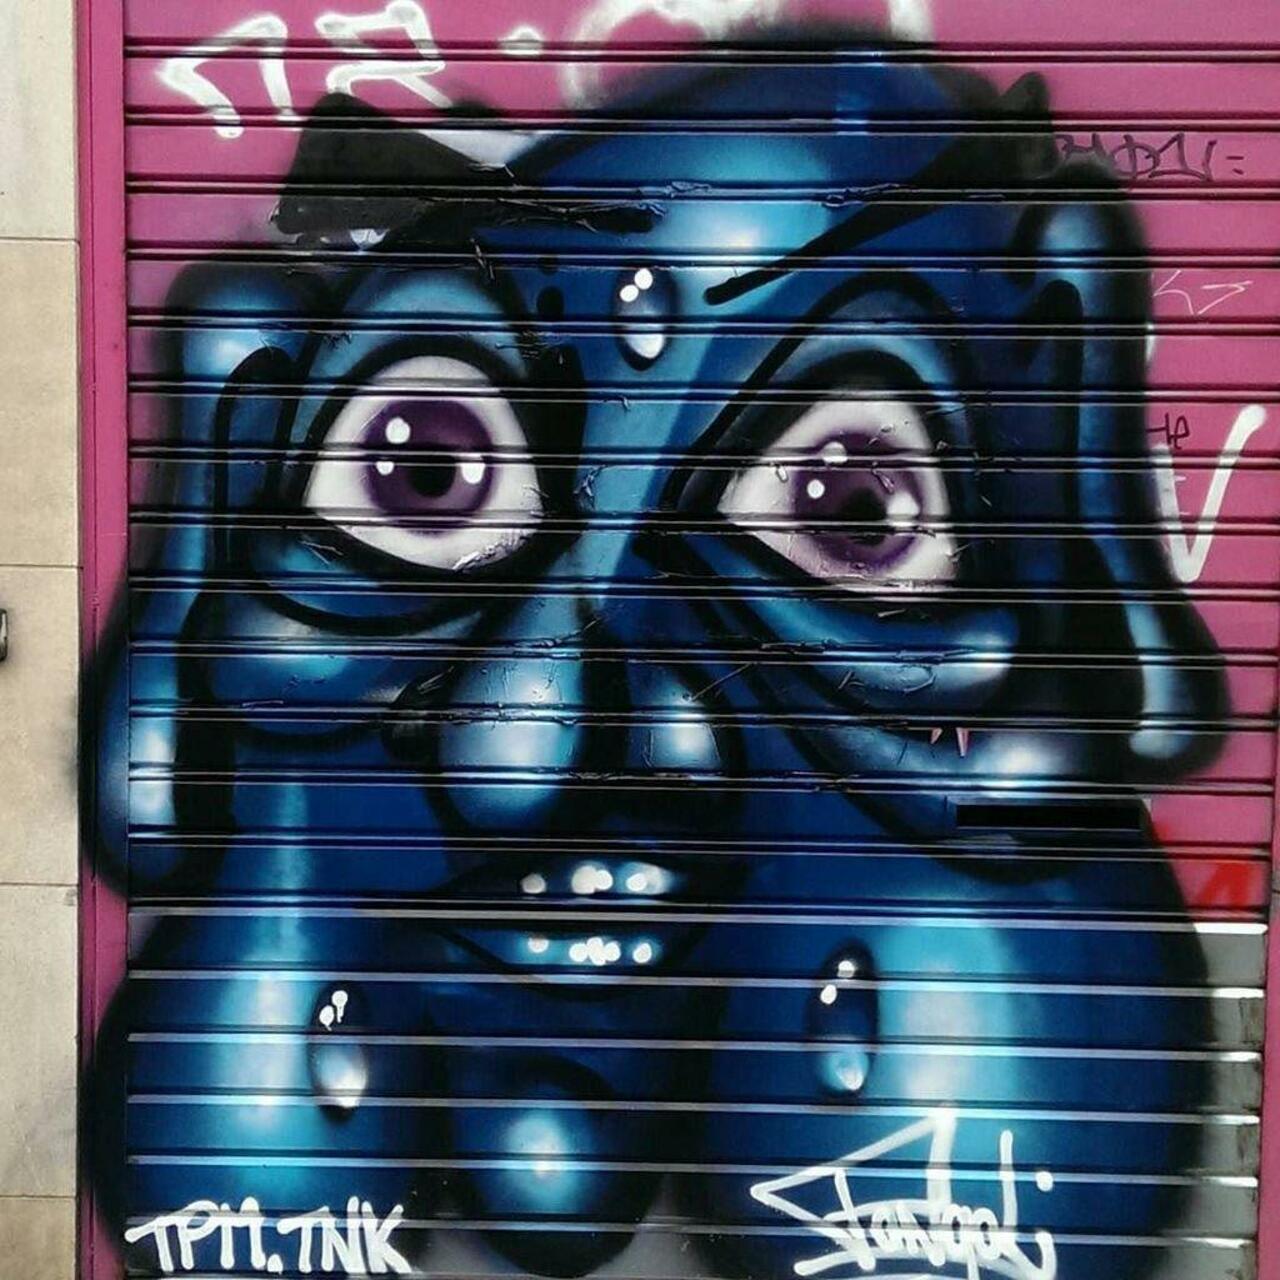 #streetart #streetarteverywhere #streetshot #graffitiart #graffiti #arturbain #urbanart #rideaudefer #painting #ste… http://t.co/lm8UeZaeSo